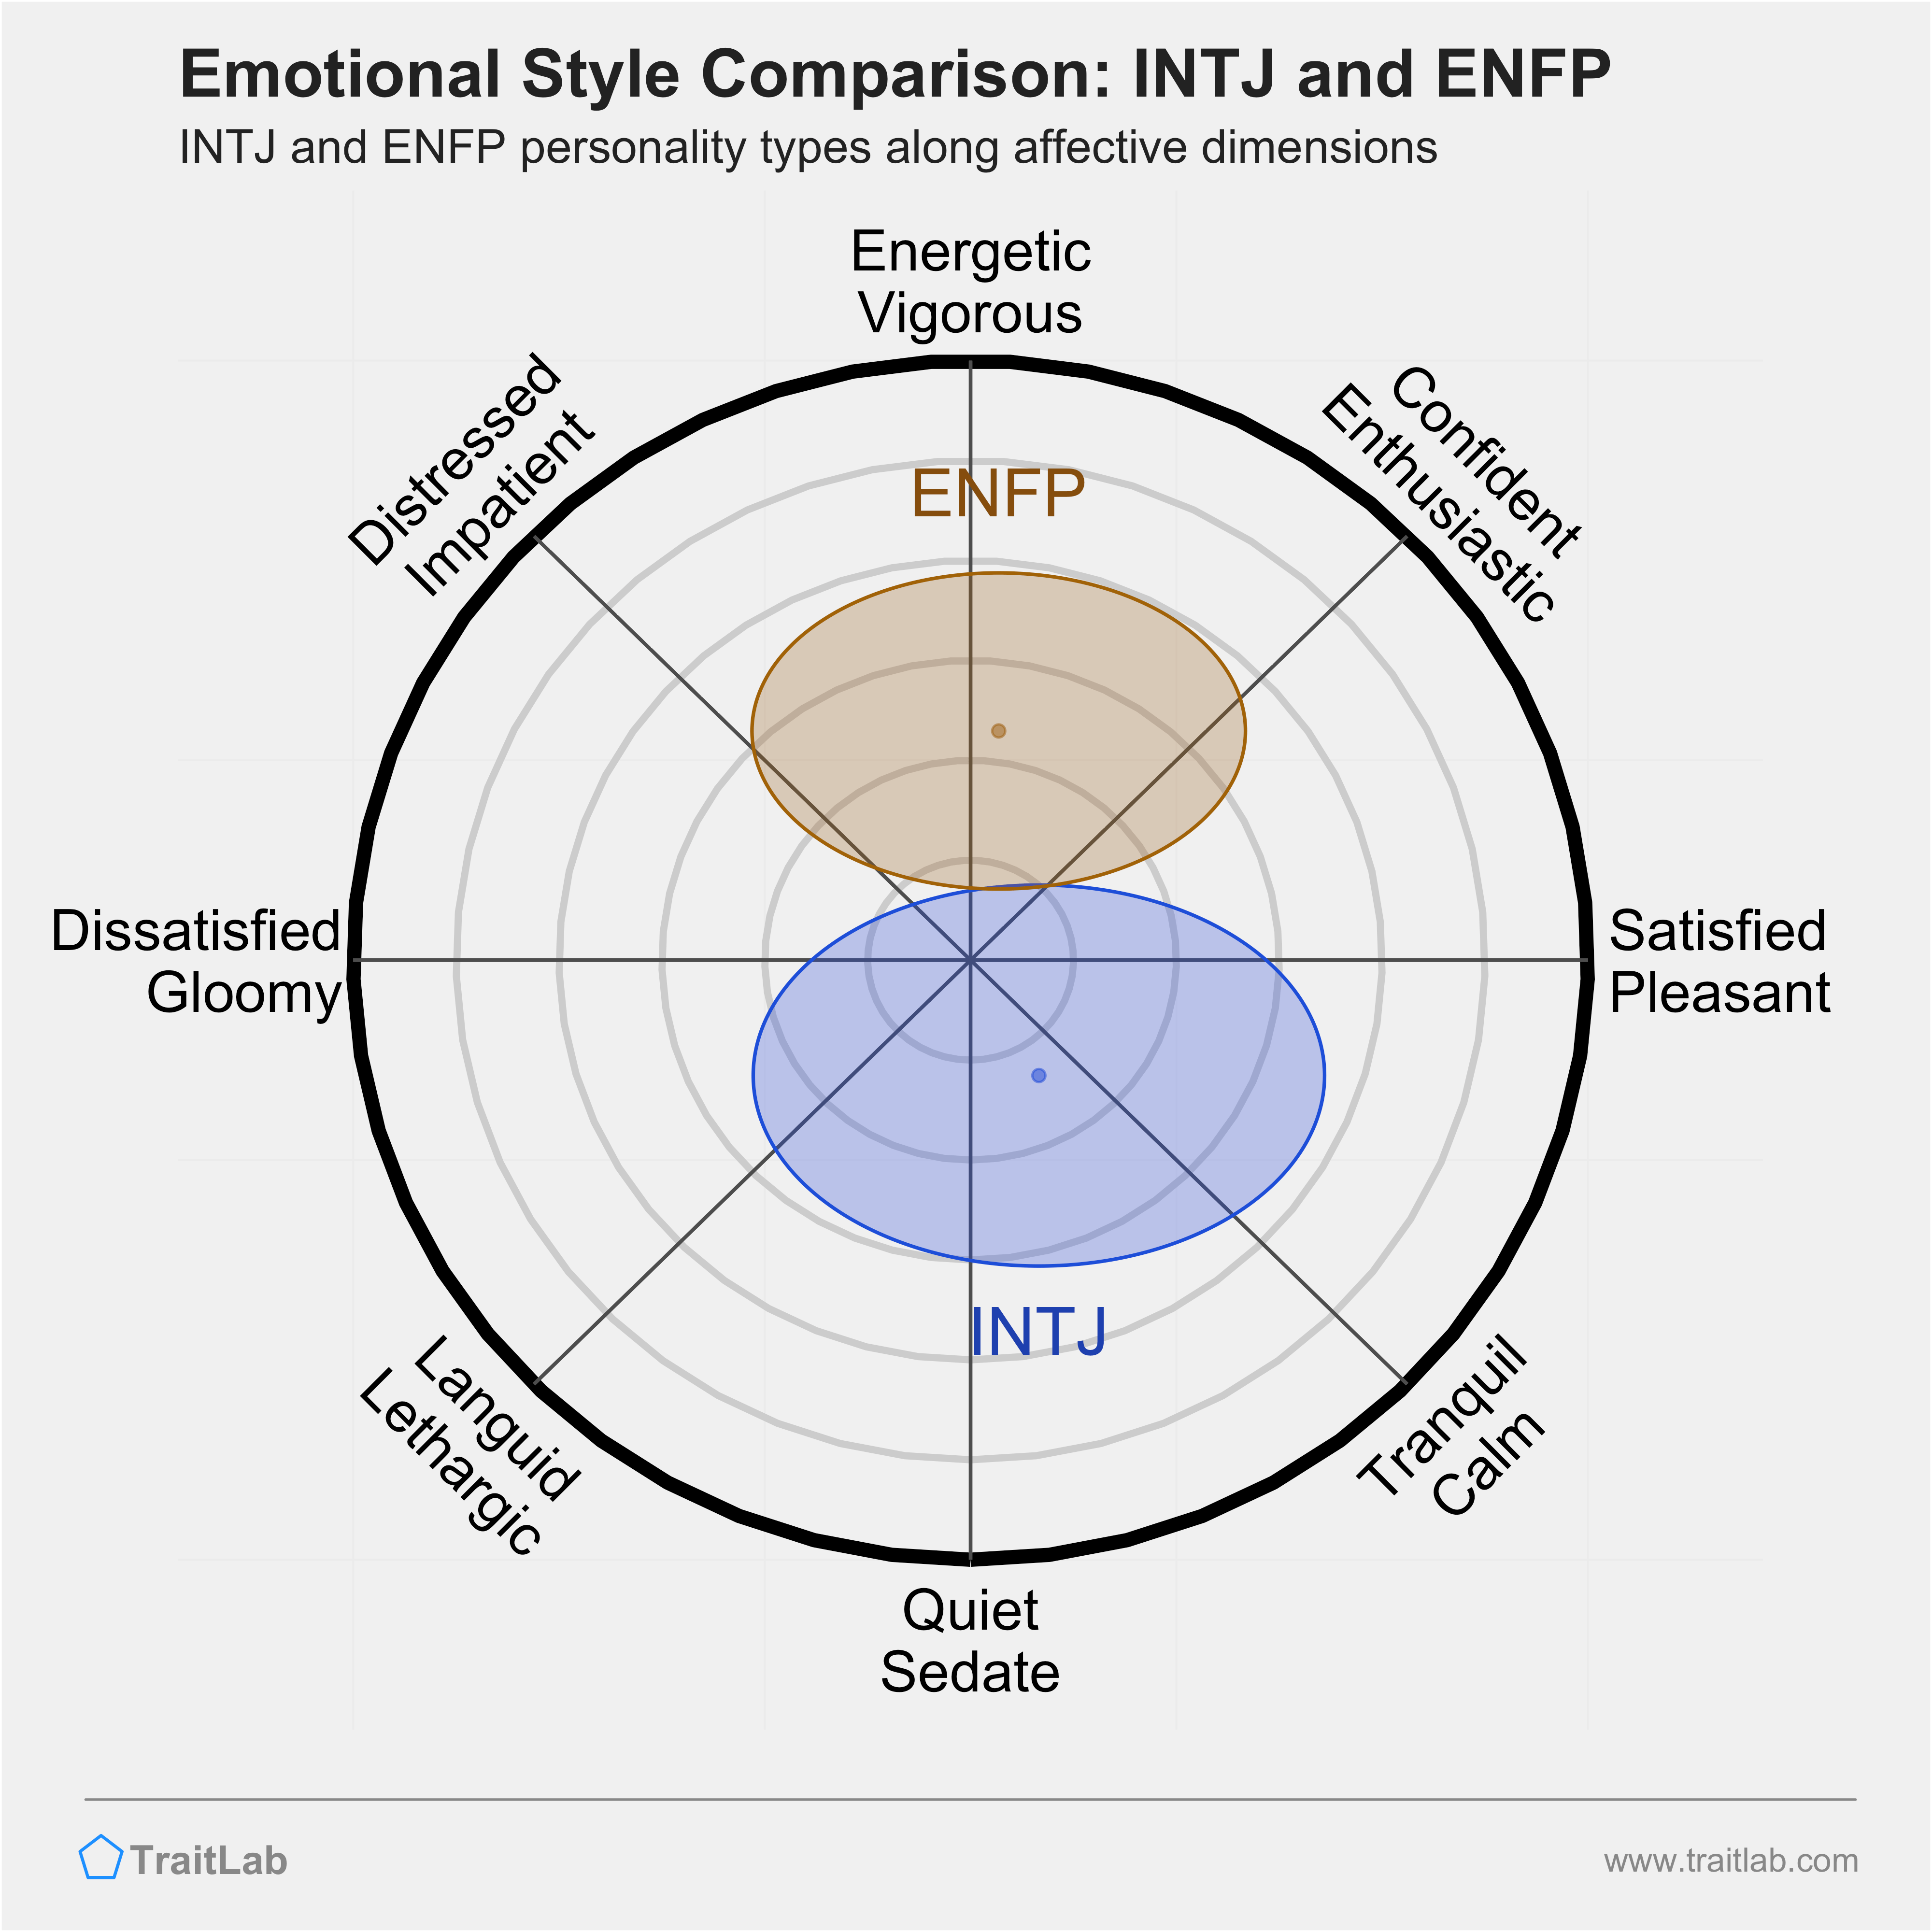 INTJ and ENFP comparison across emotional (affective) dimensions